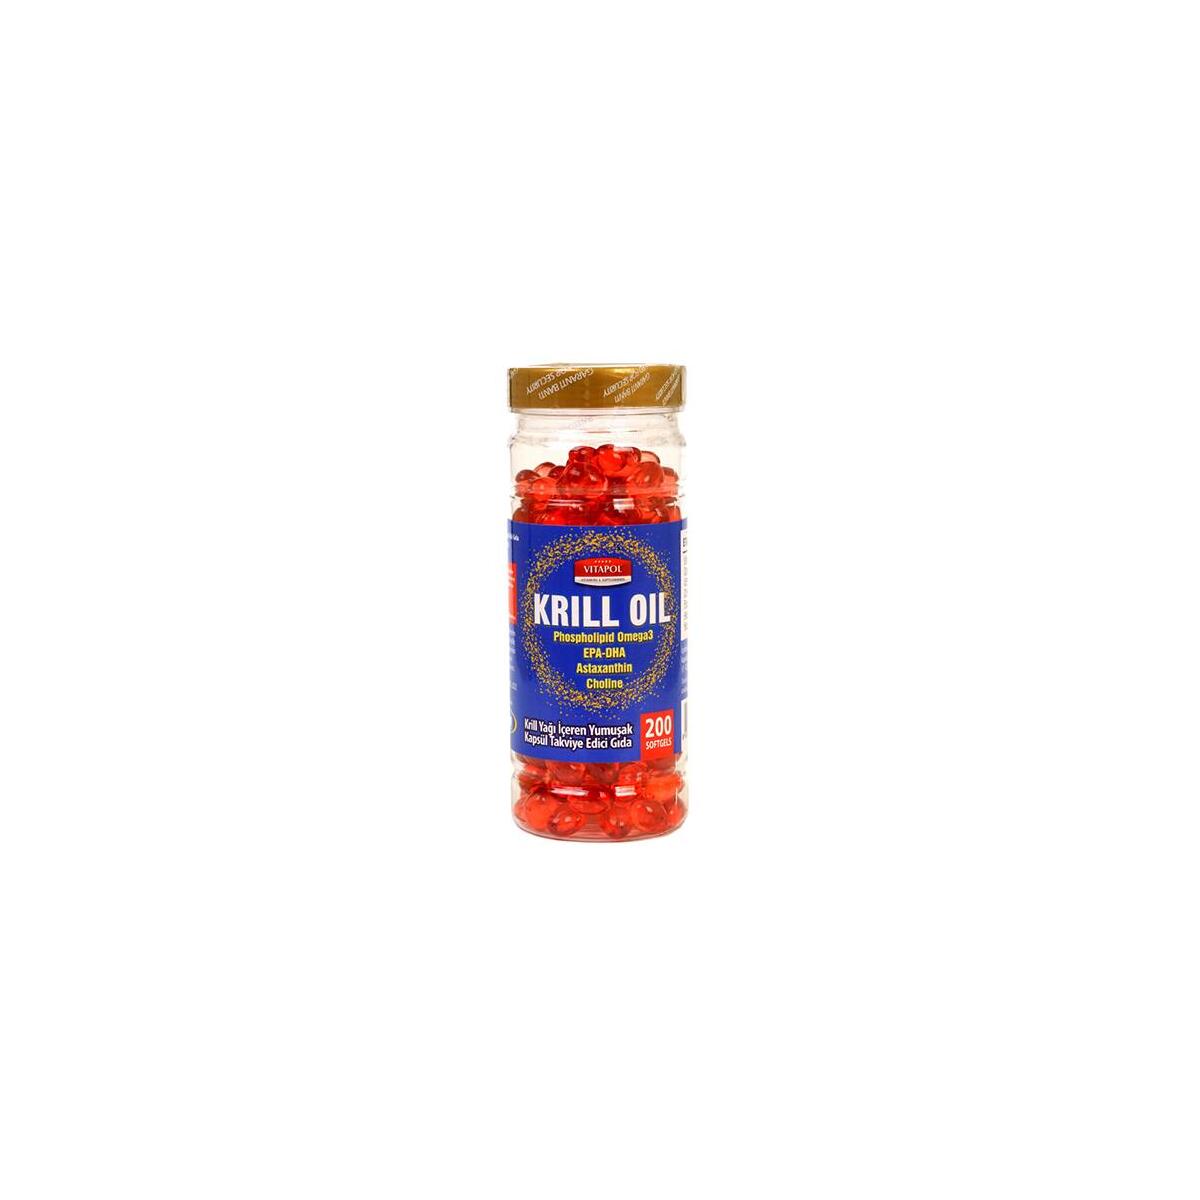 Vitapol Krill Oil 200 Yumuşak Kapsül Phospholipid Omega 3 Epa Dha Astaxanthin Choline Krill Yağı